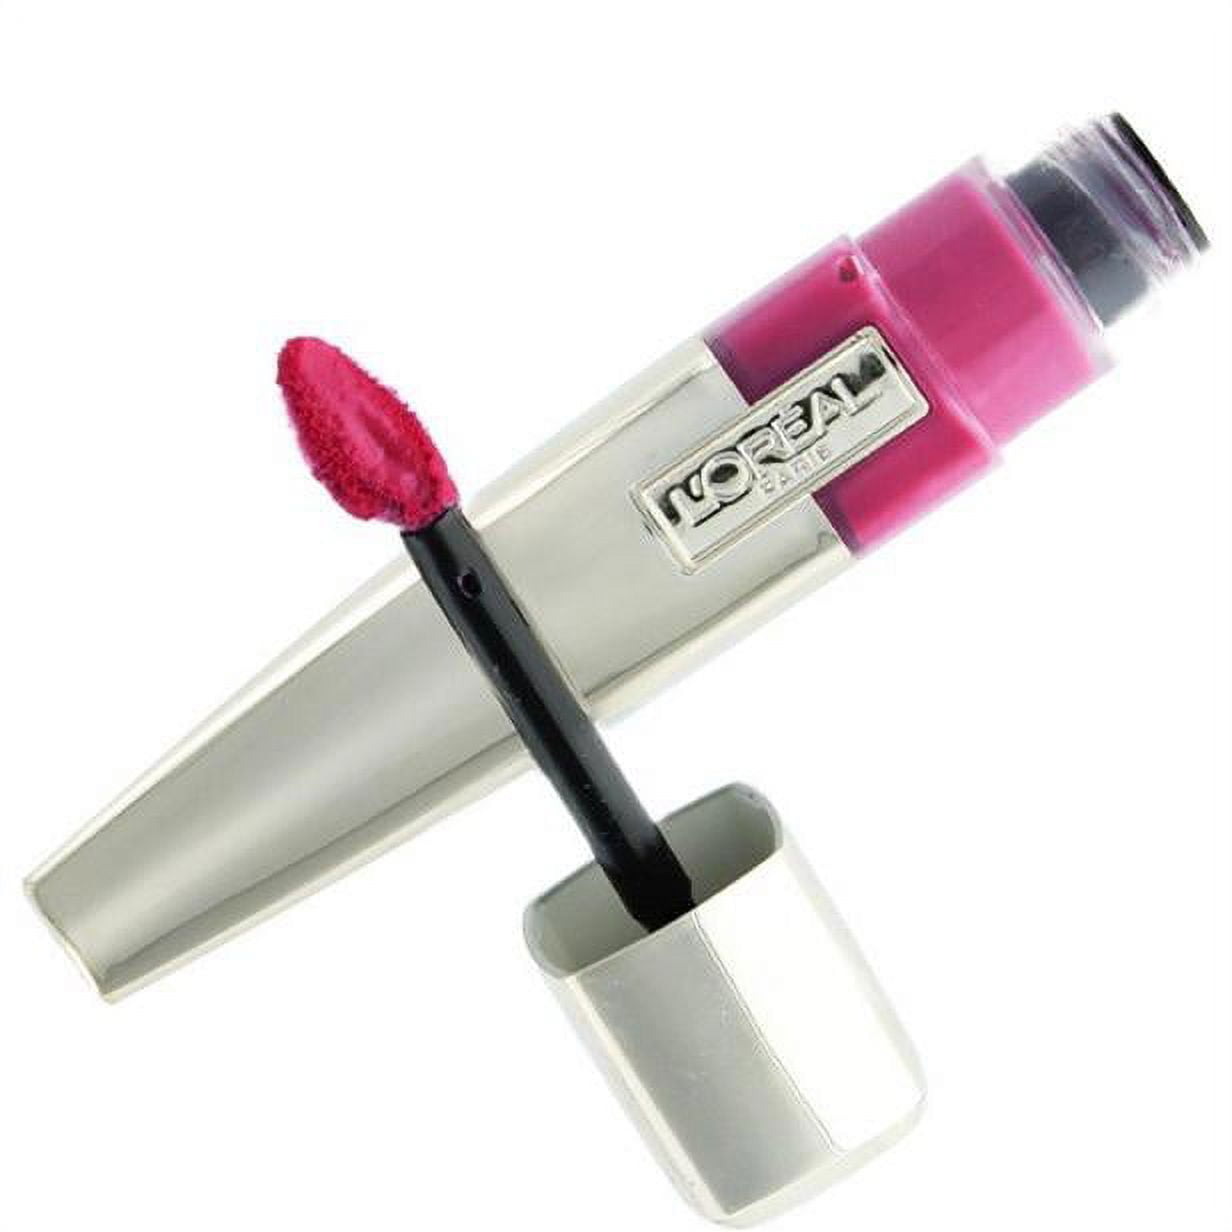 chanel #192 lipstick